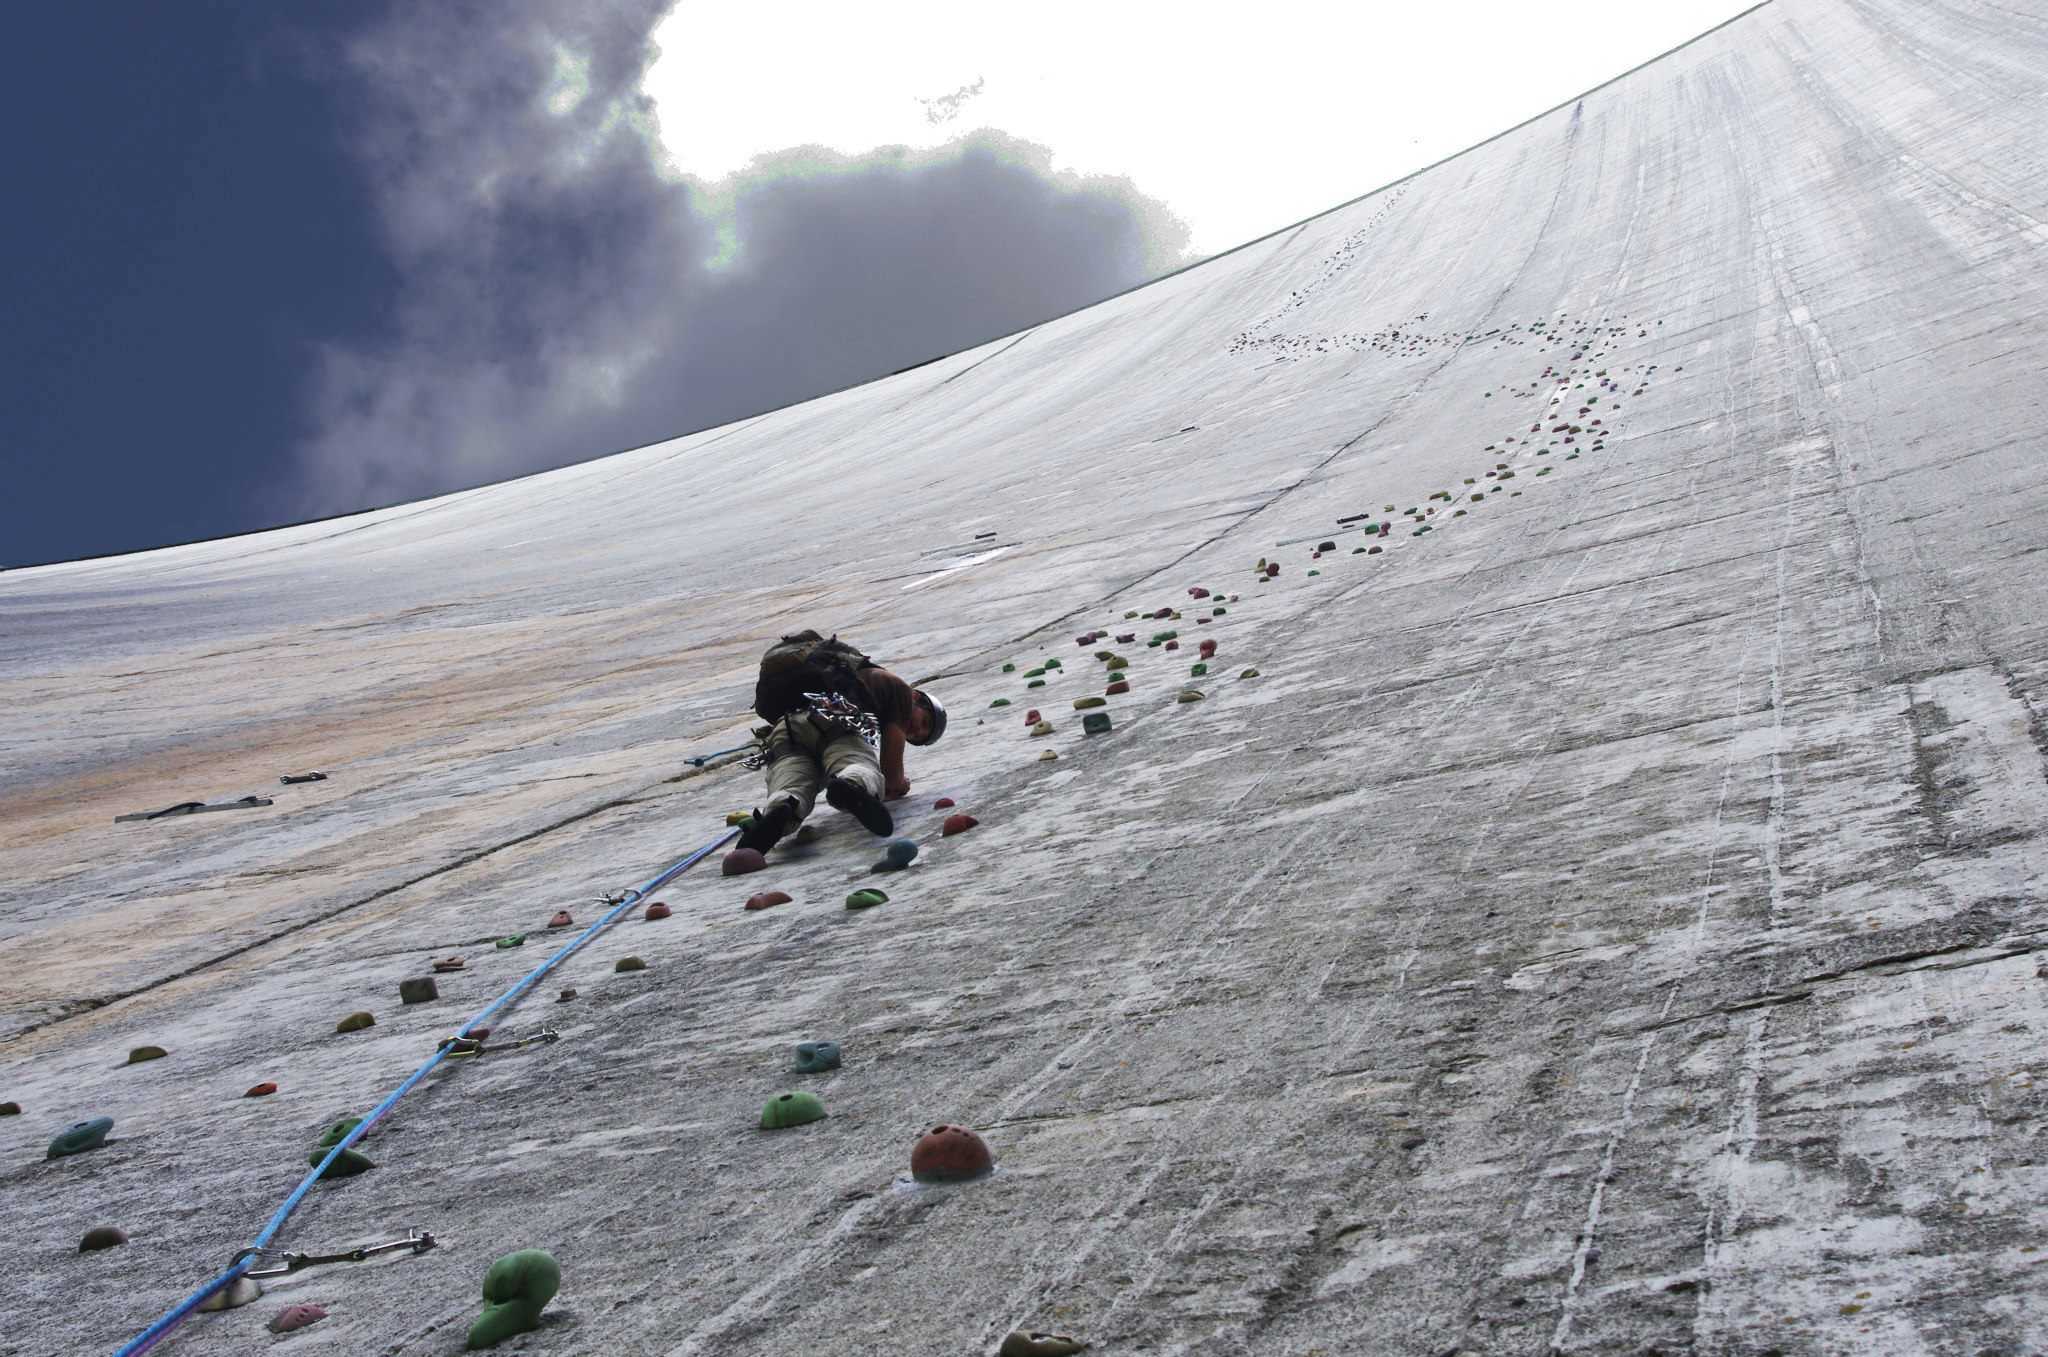 Diga di Luzzone: The Highest Artificial Climbing Wall | Vertical Gear